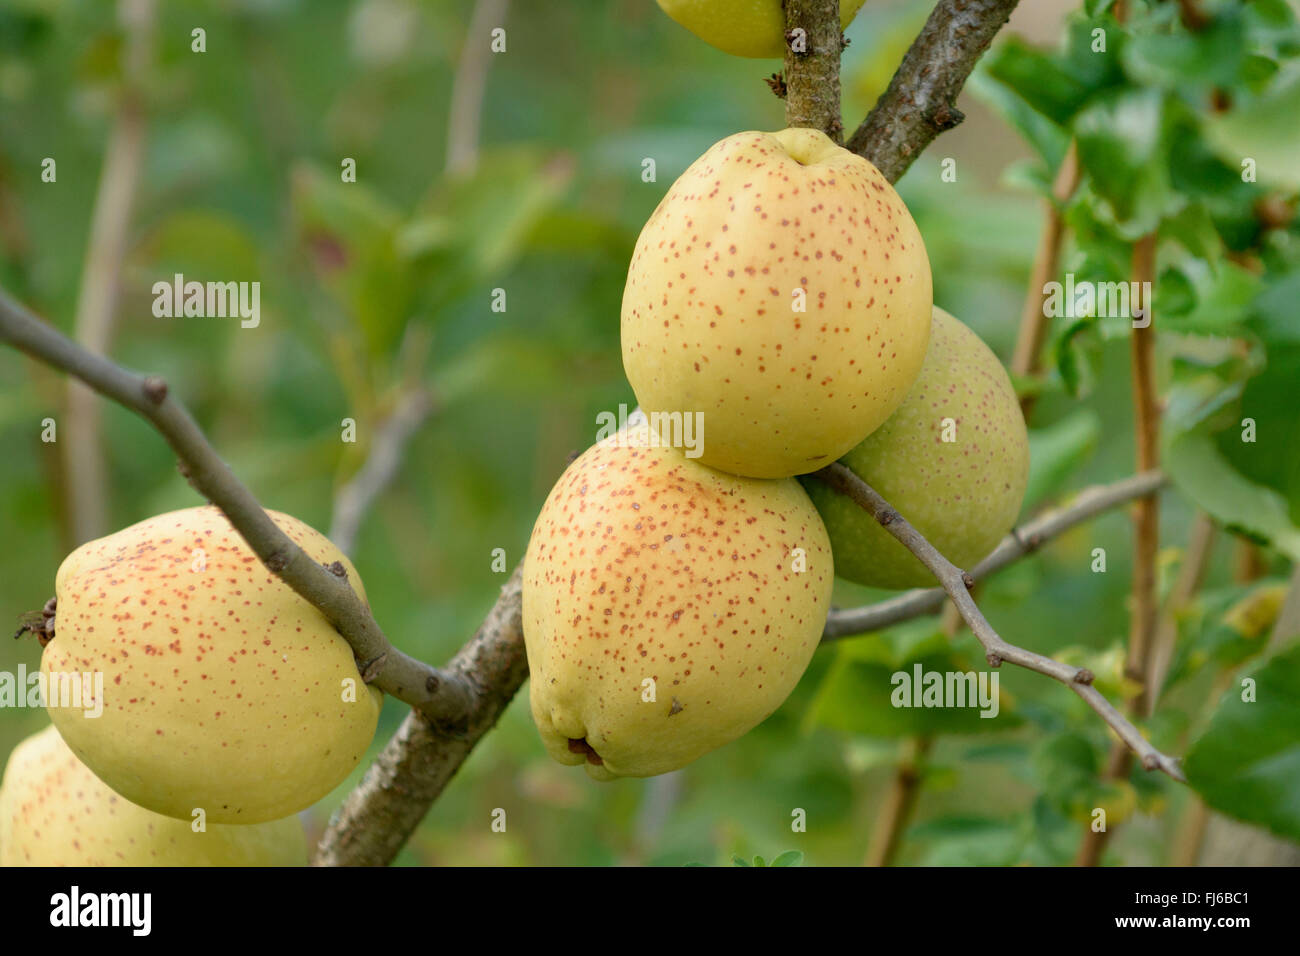 Ornamental quince (Chaenomeles x superba 'Fusion', Chaenomeles x superba Fusion), fruits of the cultivar Fusion, Germany Stock Photo